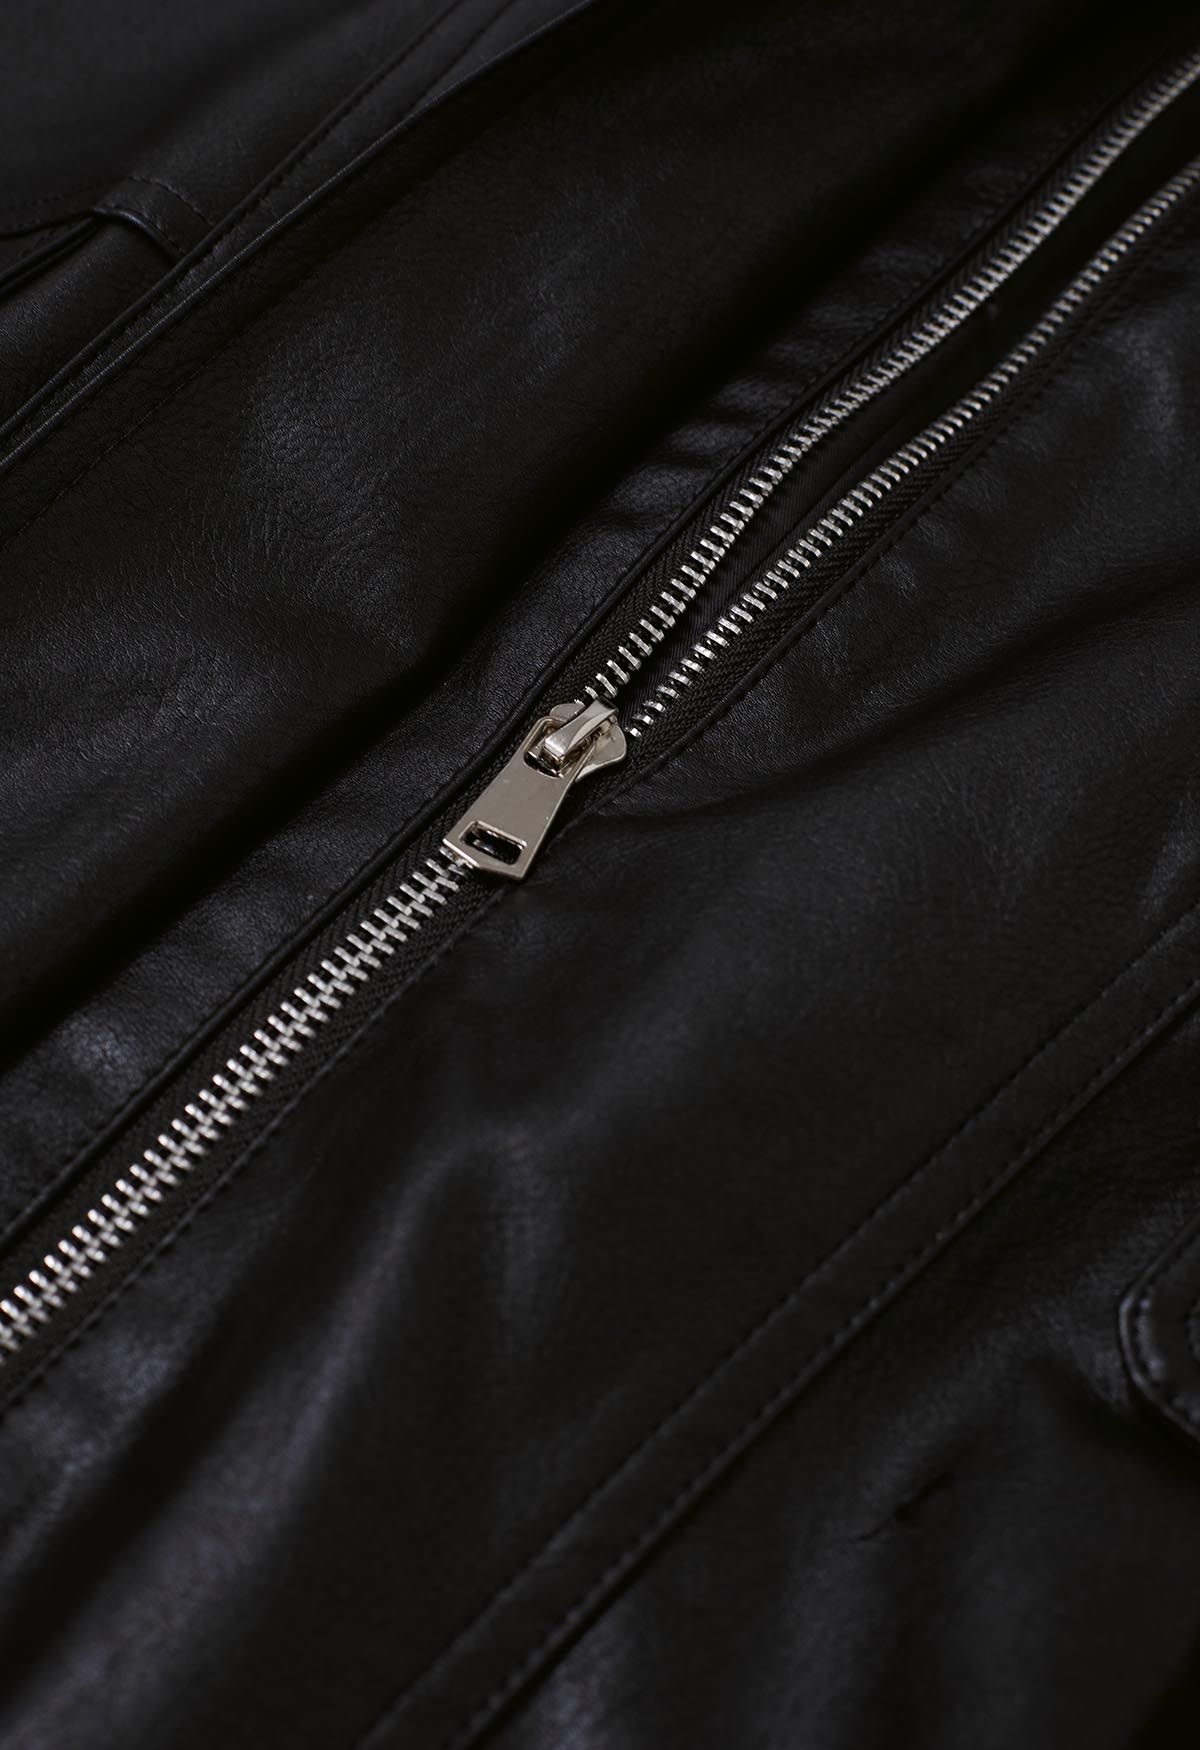 Fake Flap Pocket Faux Leather Jacket in Black